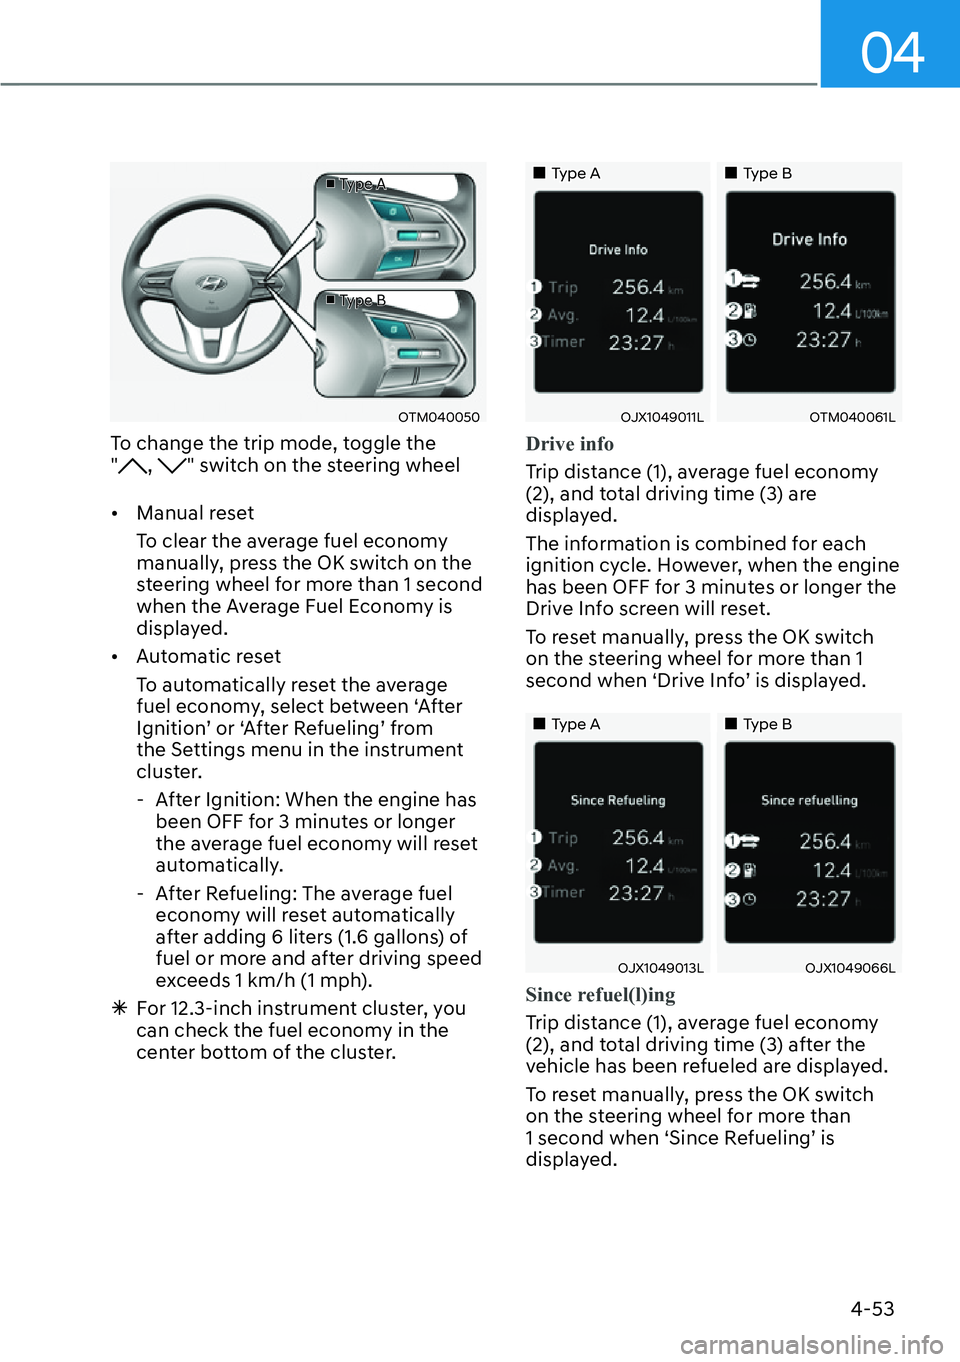 HYUNDAI SANTA FE HYBRID 2022  Owners Manual 04
4-53
v Type A
v Type B
OTM040050
To change the trip mode, toggle the   "
, " switch on the steering wheel
[� Manual reset  
To clear the average fuel economy  
manually, press the OK sw